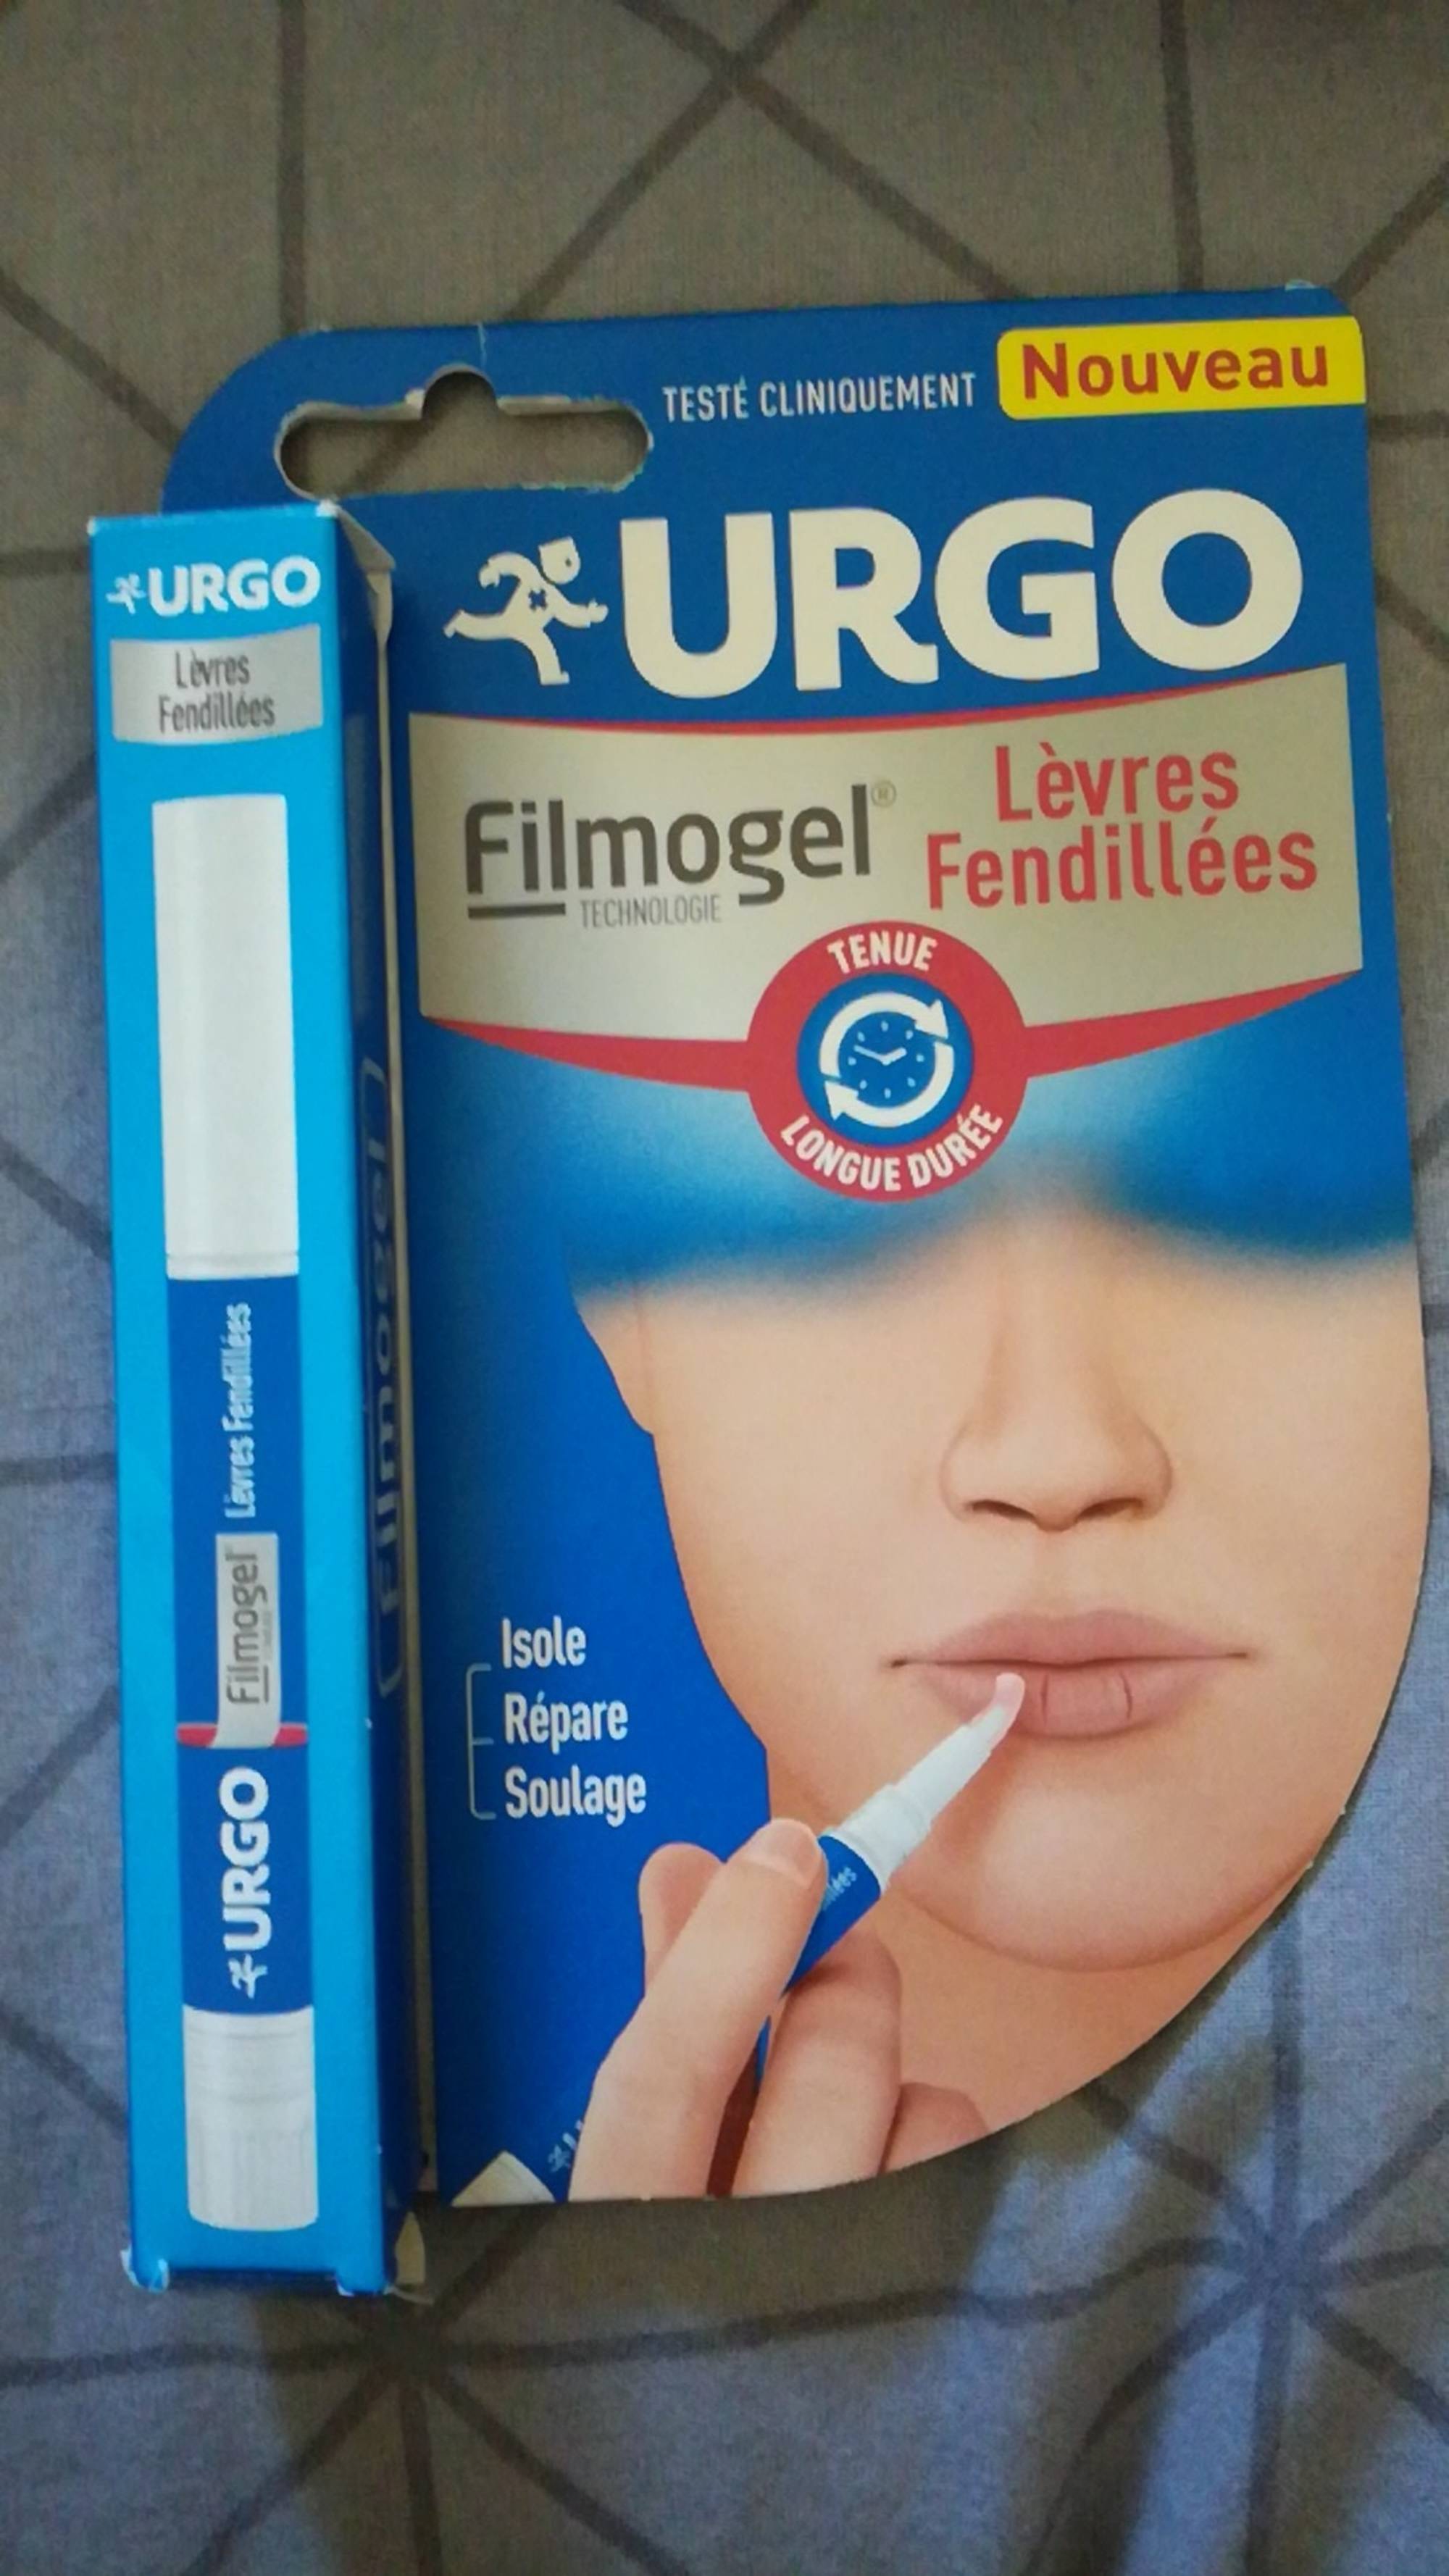 URGO - Filmogel - Lèvre fendillées